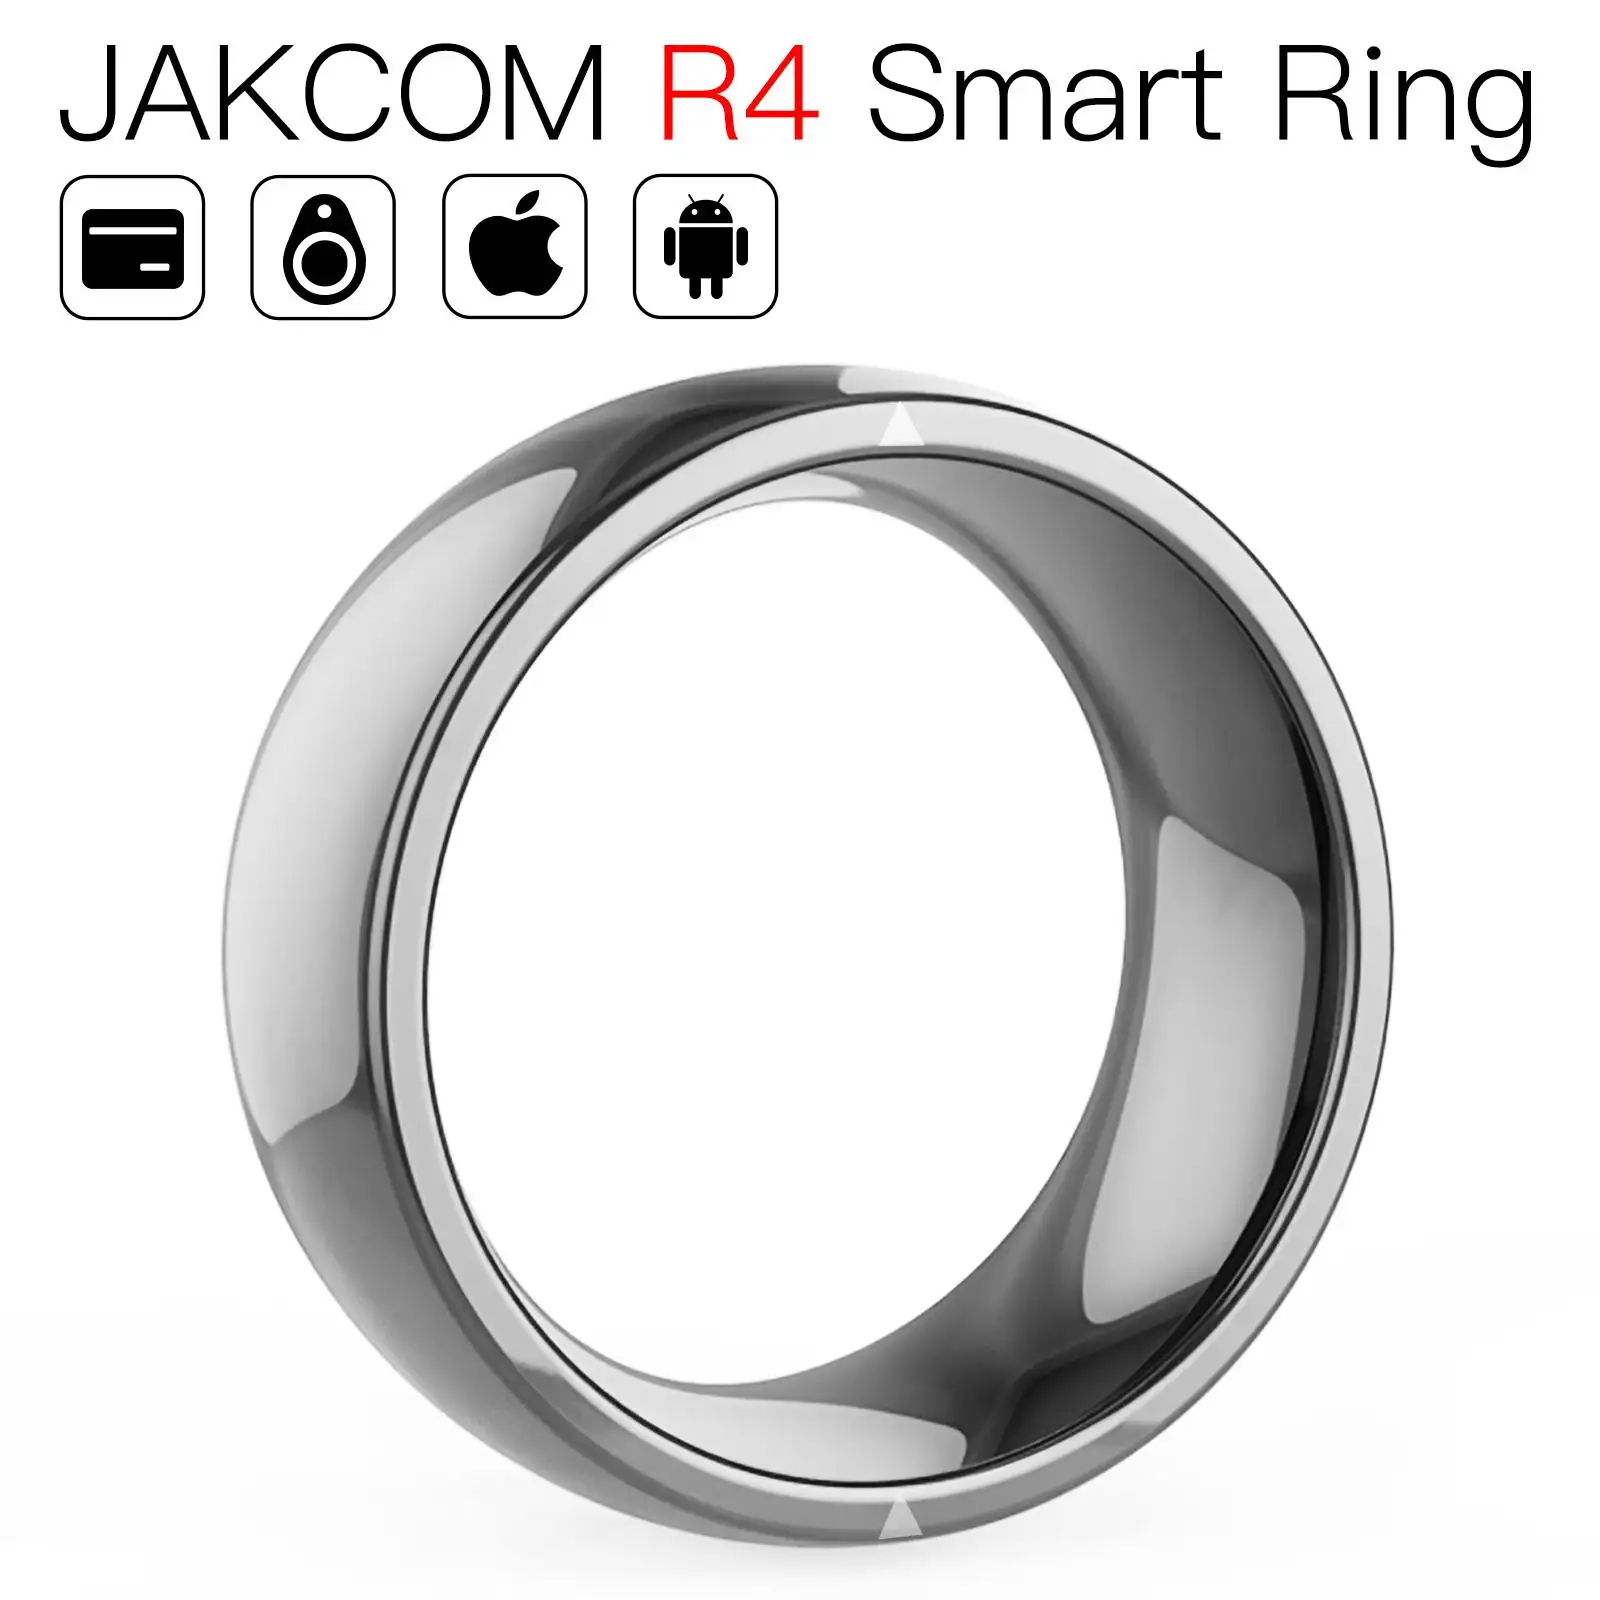 JAKCOM R4 anillo inteligente electrónica de consumo, accesorios para teléfonos móviles, relojes de hombre caliente de Francia